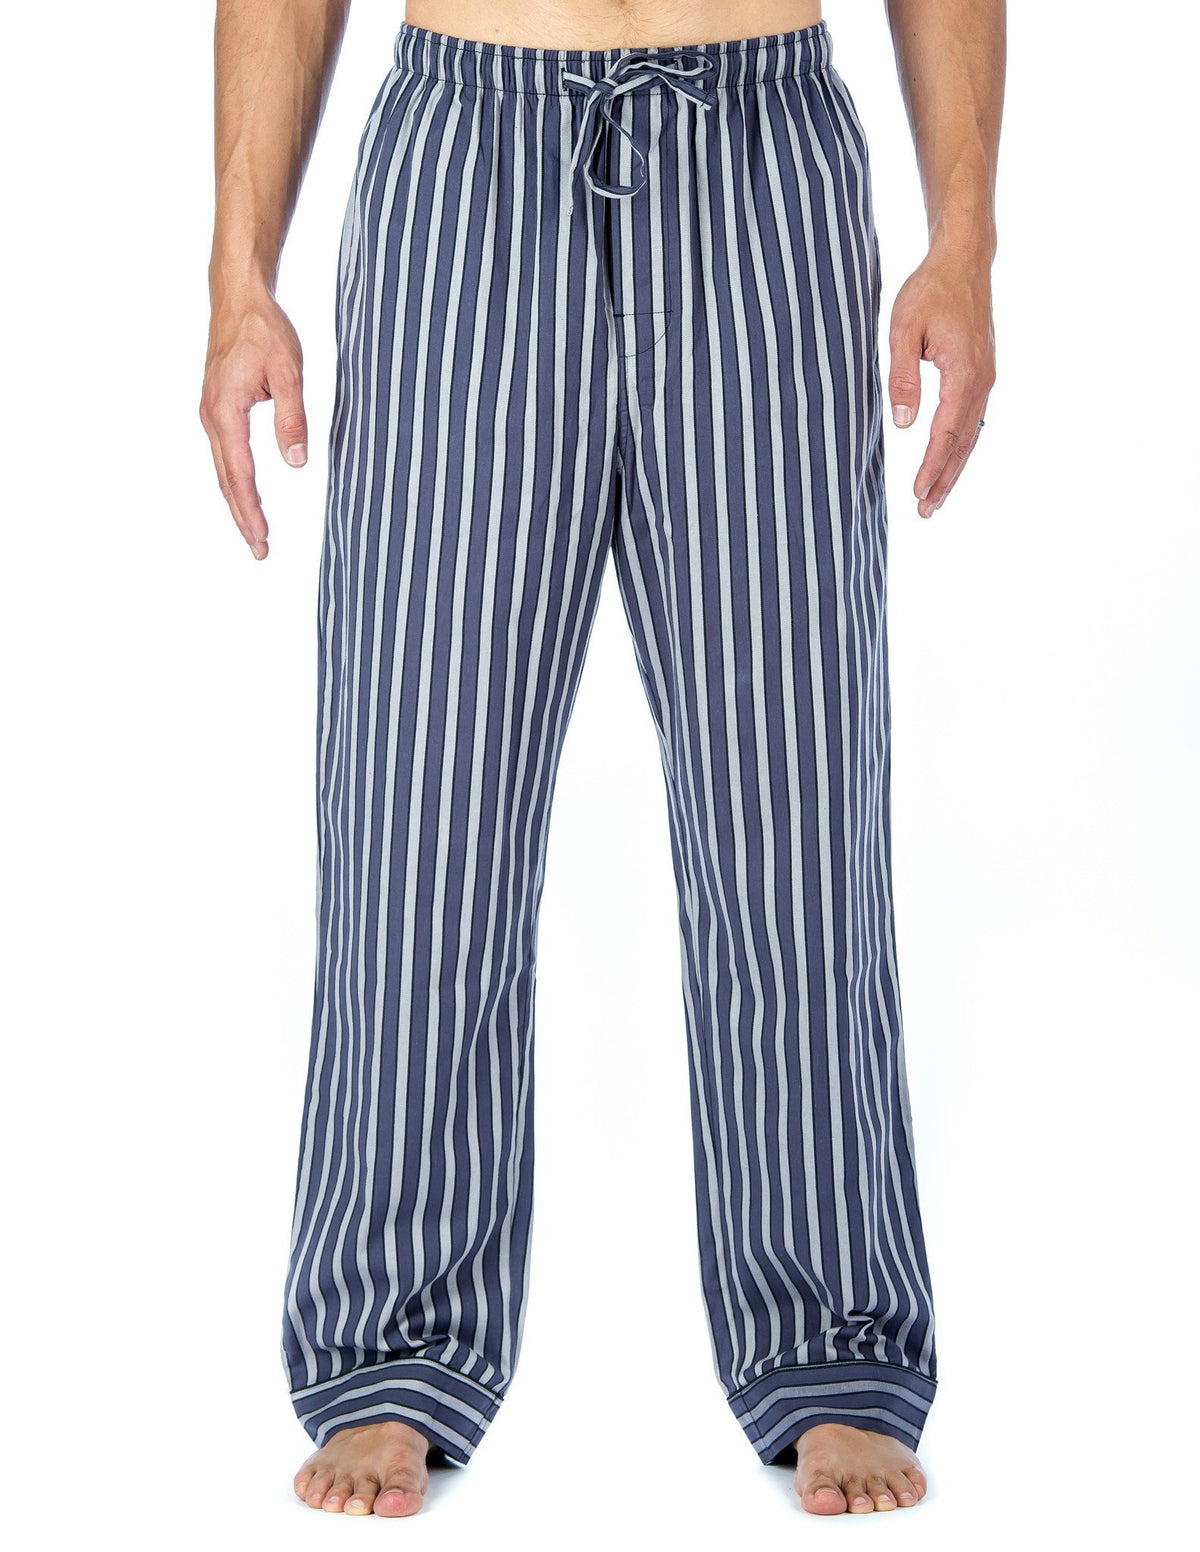 Men's 100% Cotton Comfort-Fit Sleep/Lounge Pants - Stripes Grey Tone